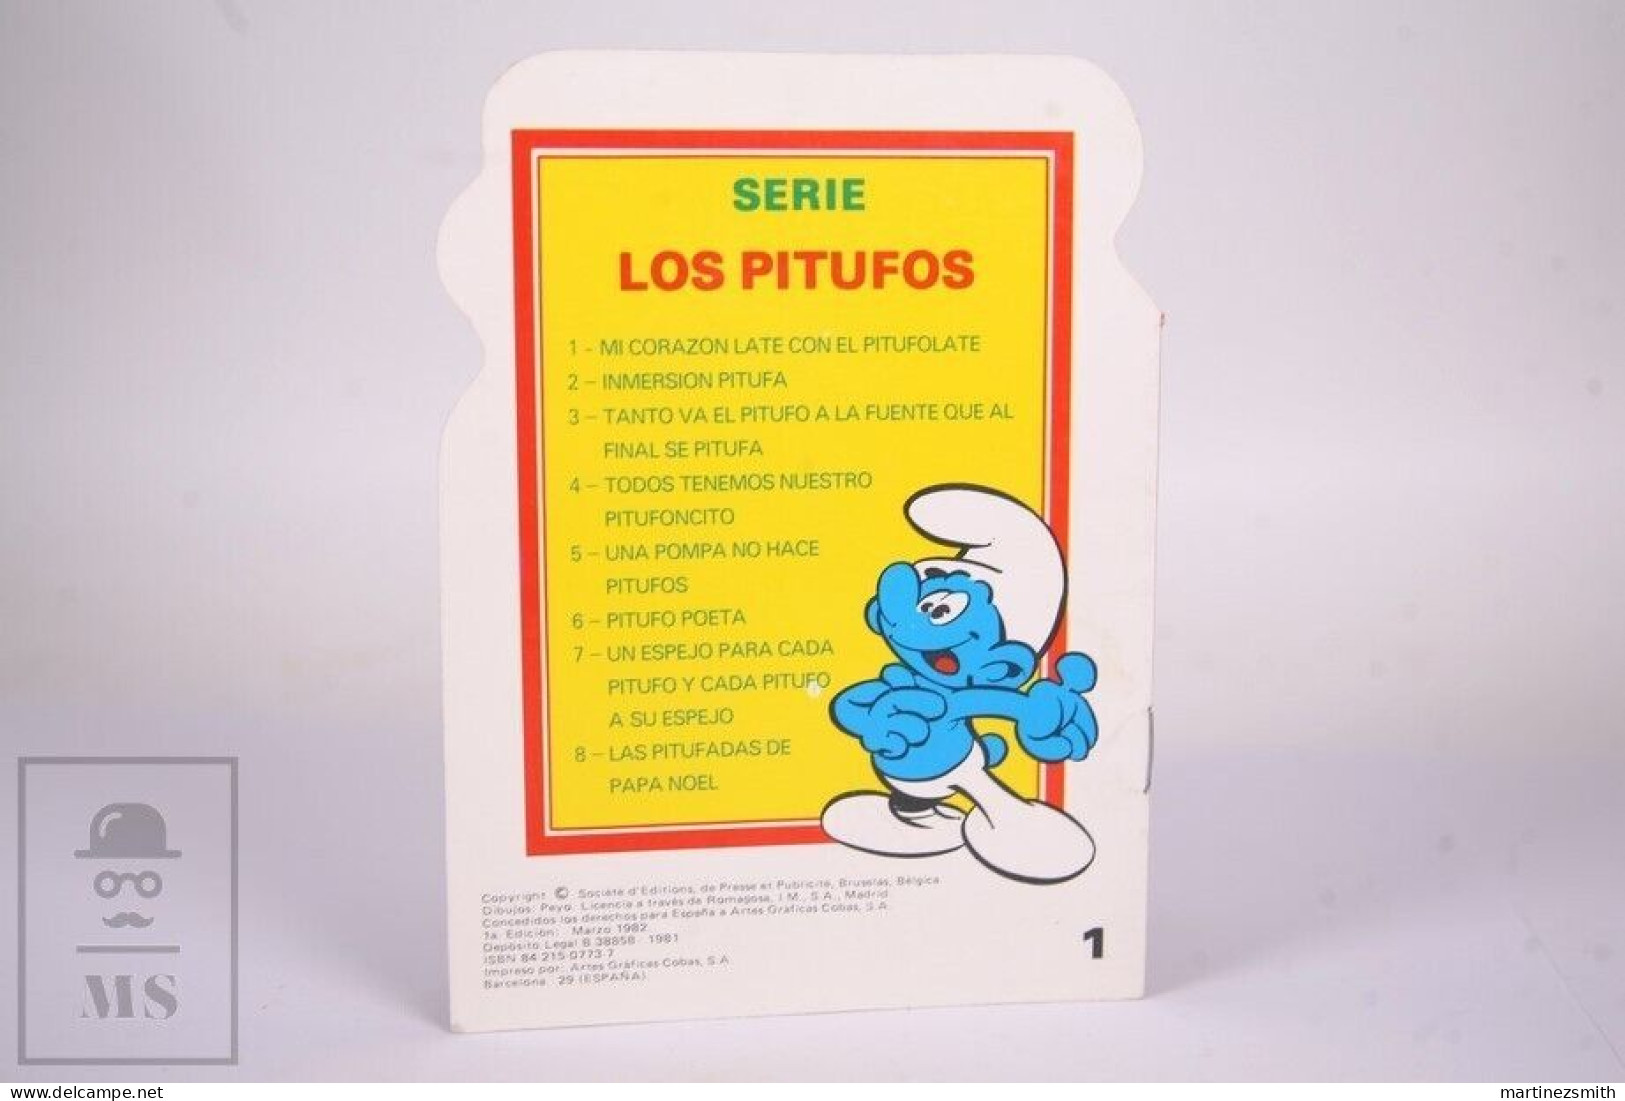 Original 1982 Smurfs Peyo Die-Cut Childrens Book - First Edition - Small Sized - Libri Bambini E Ragazzi